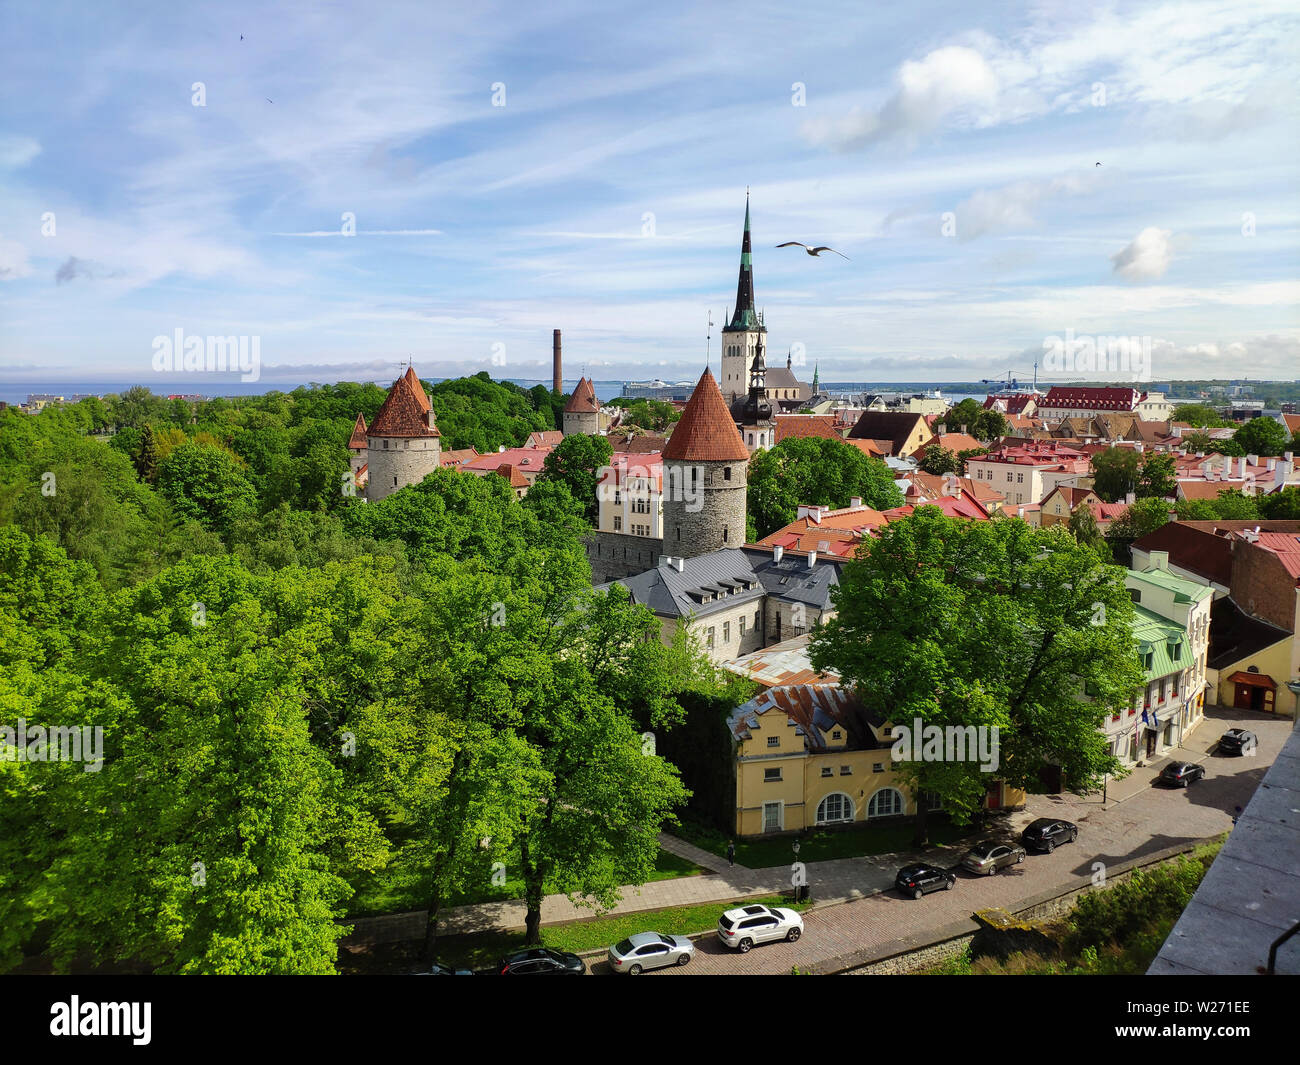 View over the old town of Tallinn, Estonia Stock Photo